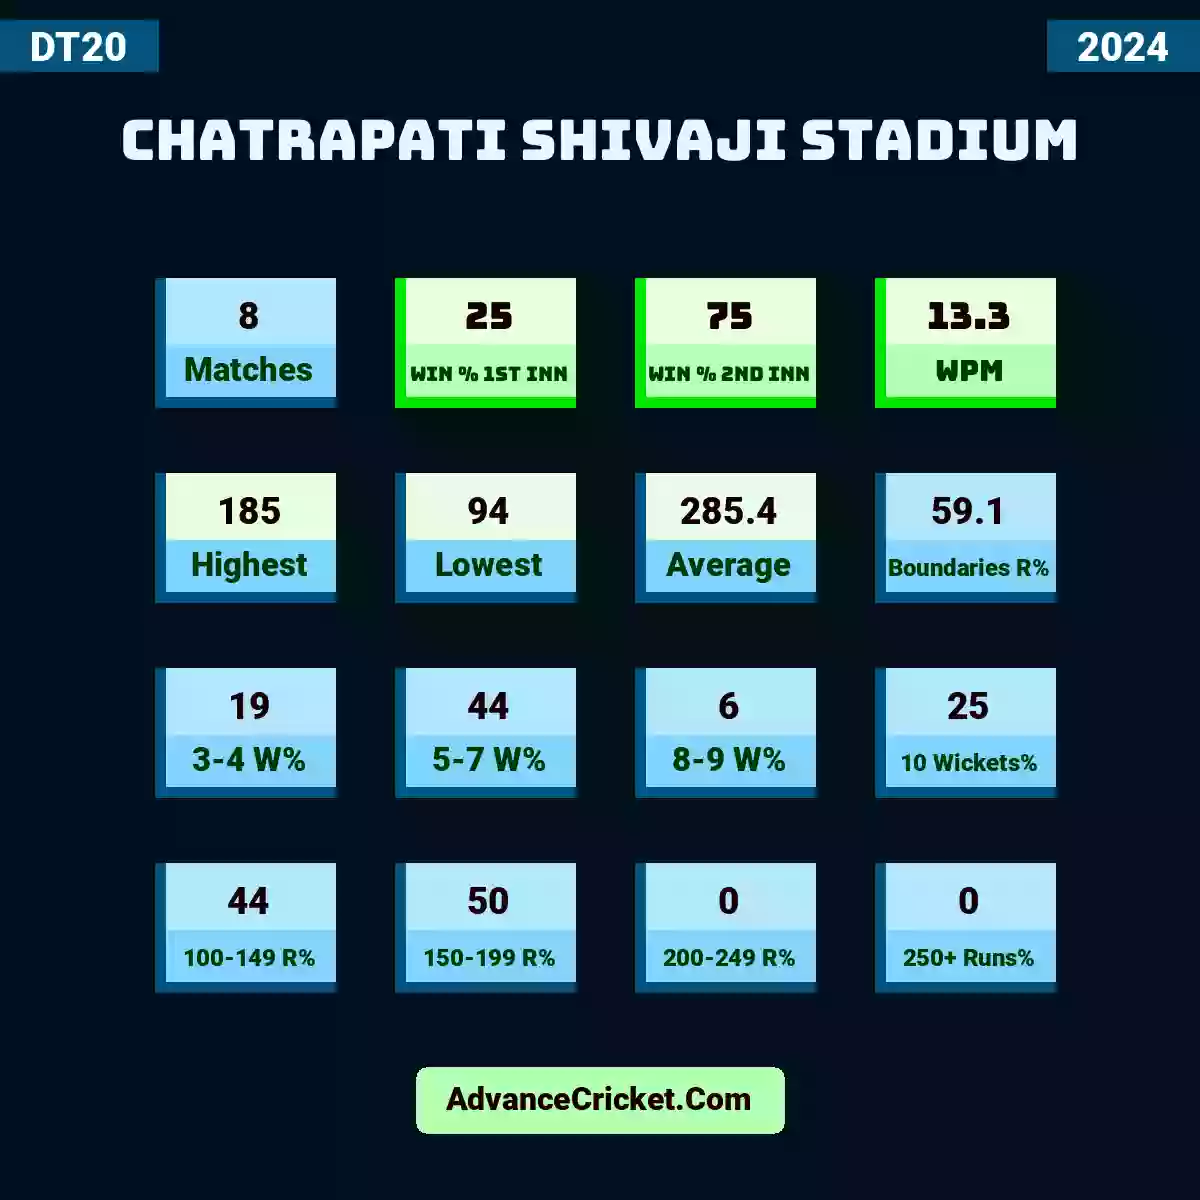 Image showing Chatrapati Shivaji Stadium with Matches: 8, Win % 1st Inn: 25, Win % 2nd Inn: 75, WPM: 13.3, Highest: 185, Lowest: 94, Average: 285.4, Boundaries R%: 59.1, 3-4 W%: 19, 5-7 W%: 44, 8-9 W%: 6, 10 Wickets%: 25, 100-149 R%: 44, 150-199 R%: 50, 200-249 R%: 0, 250+ Runs%: 0.